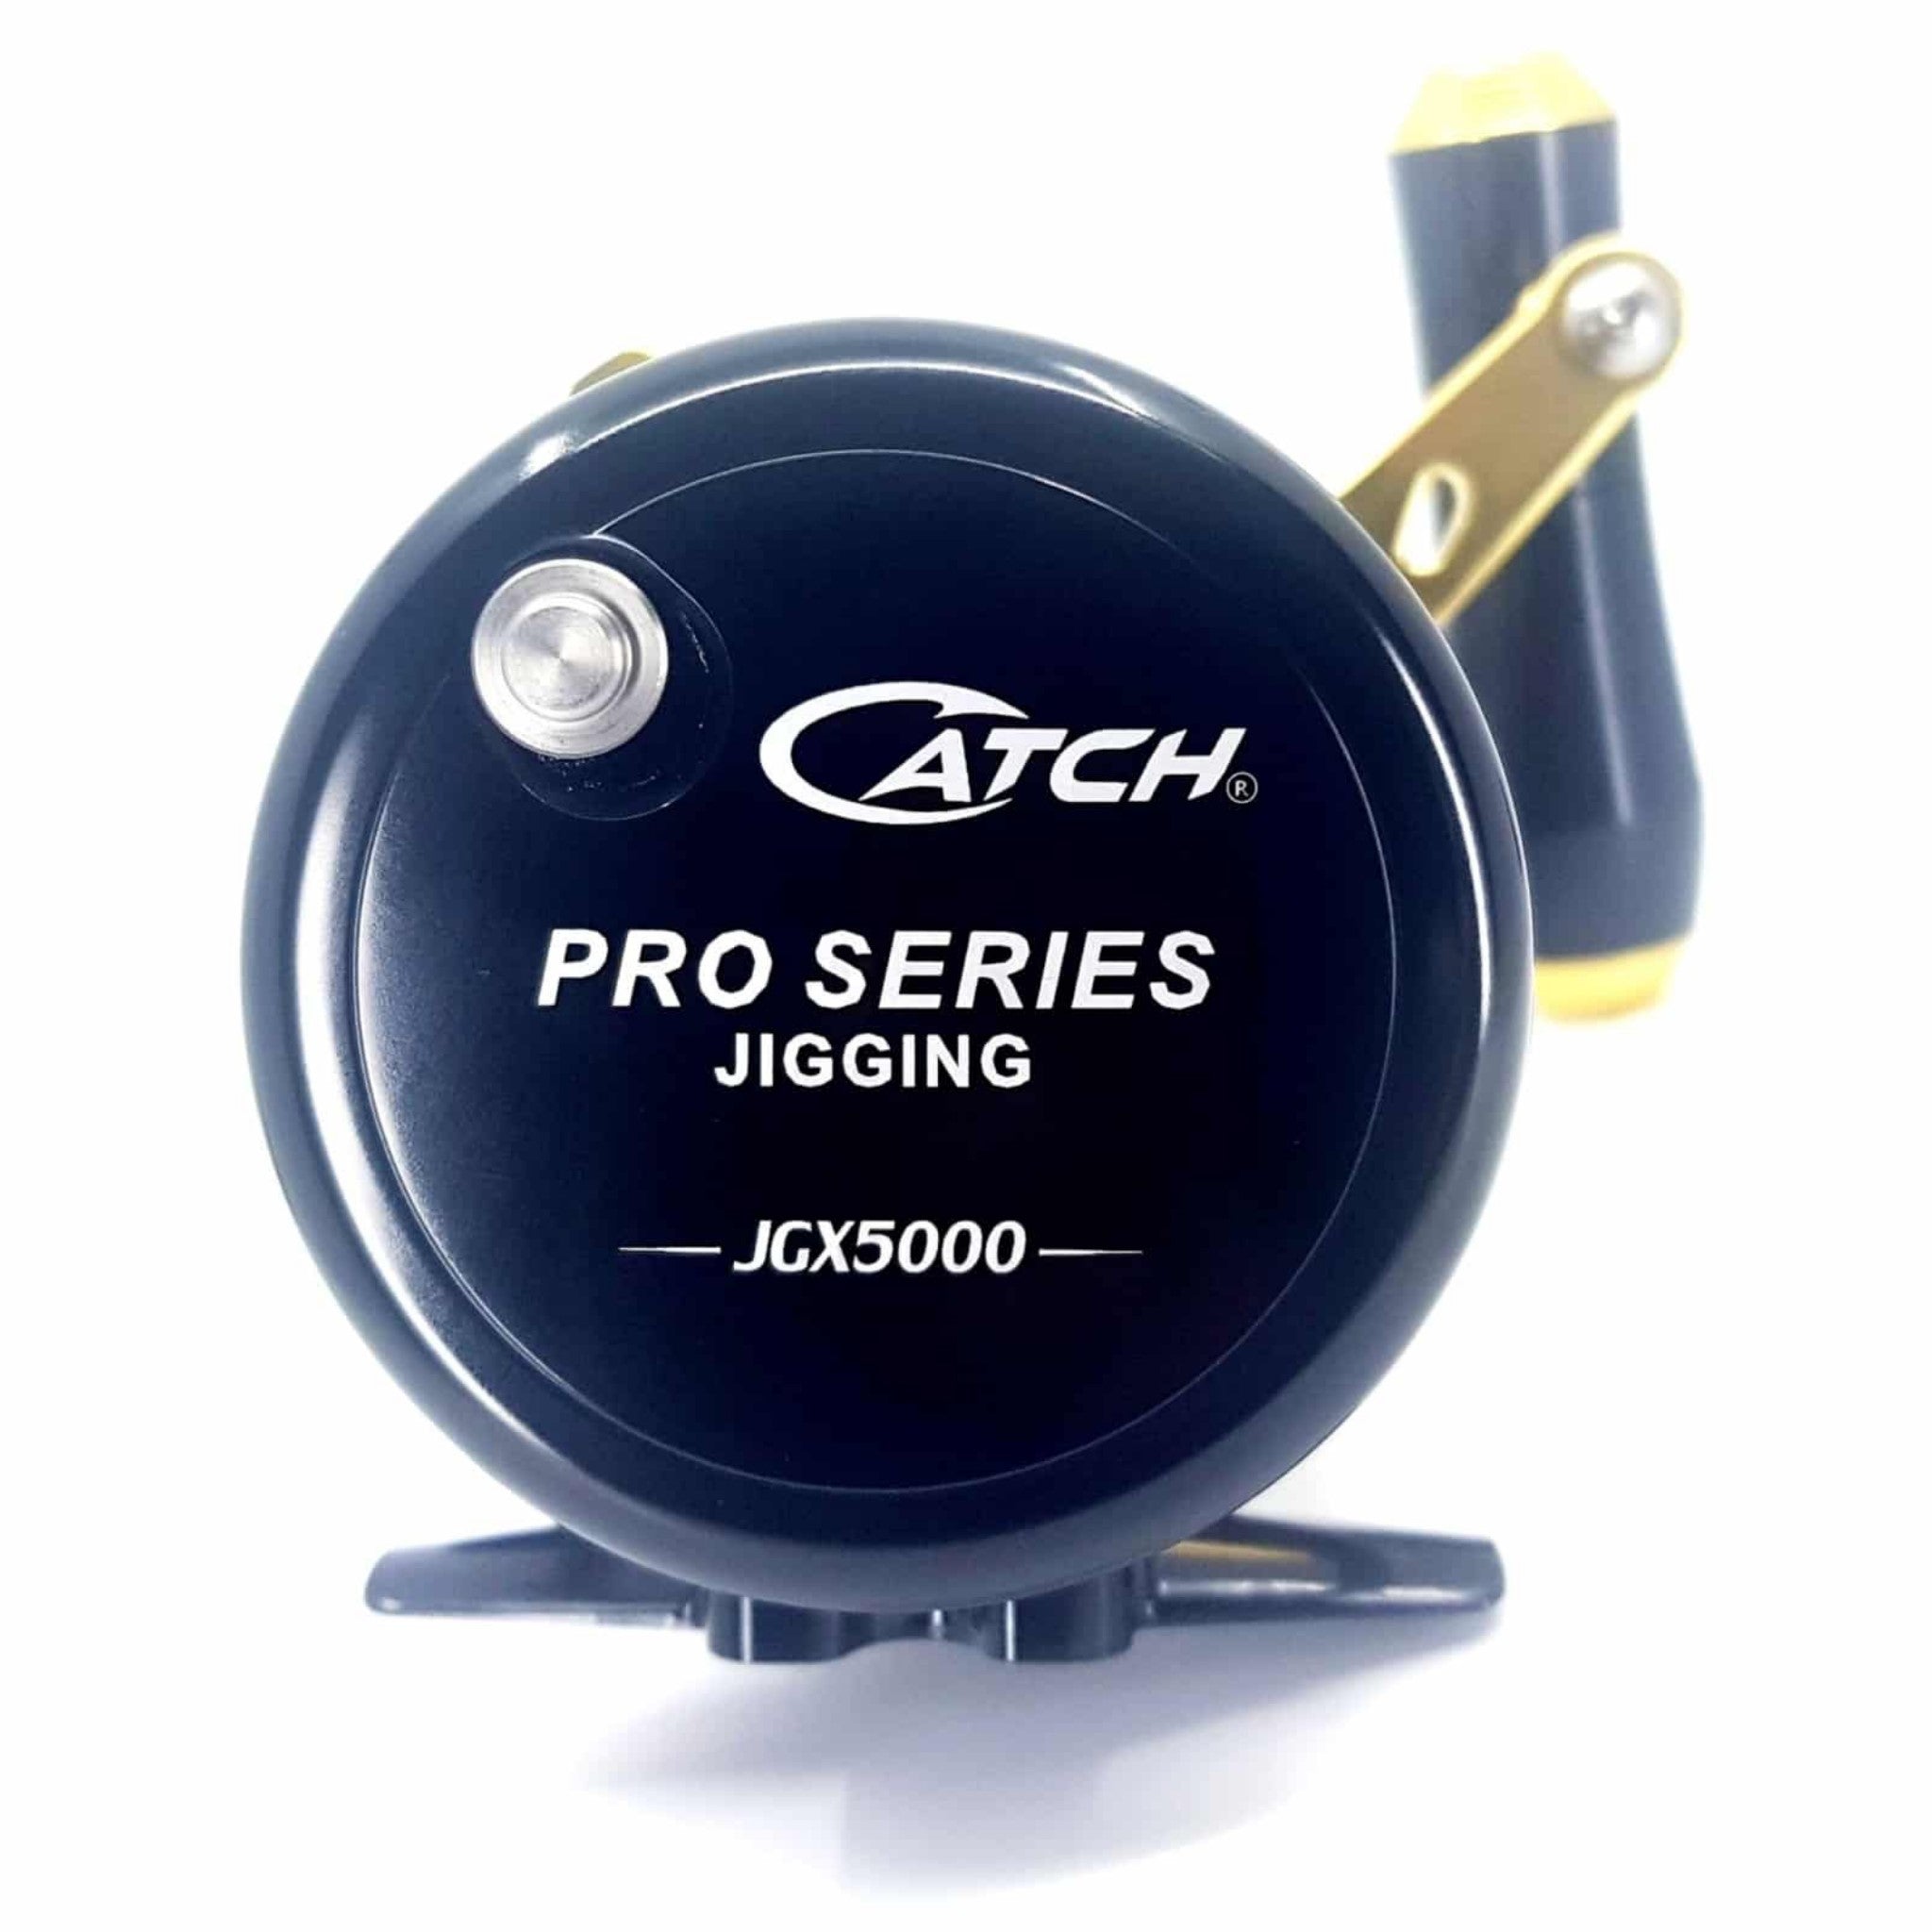 Catch Pro Series JGX5000 Jigging Reel Left Handed